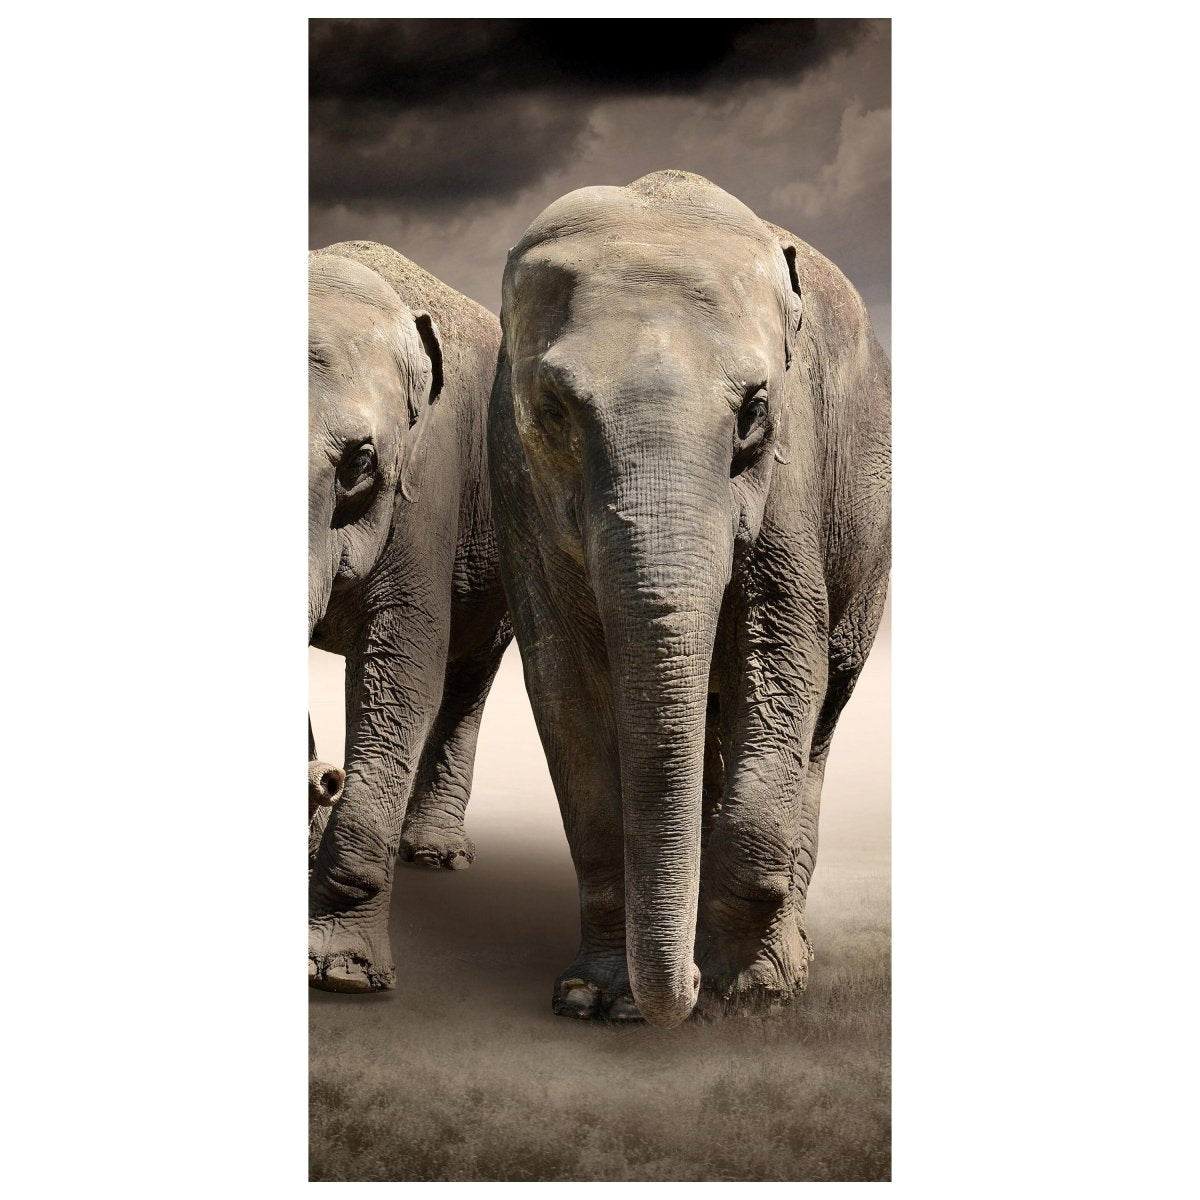 Türtapete Elefantentraum Afrika M0244 - Bild 2